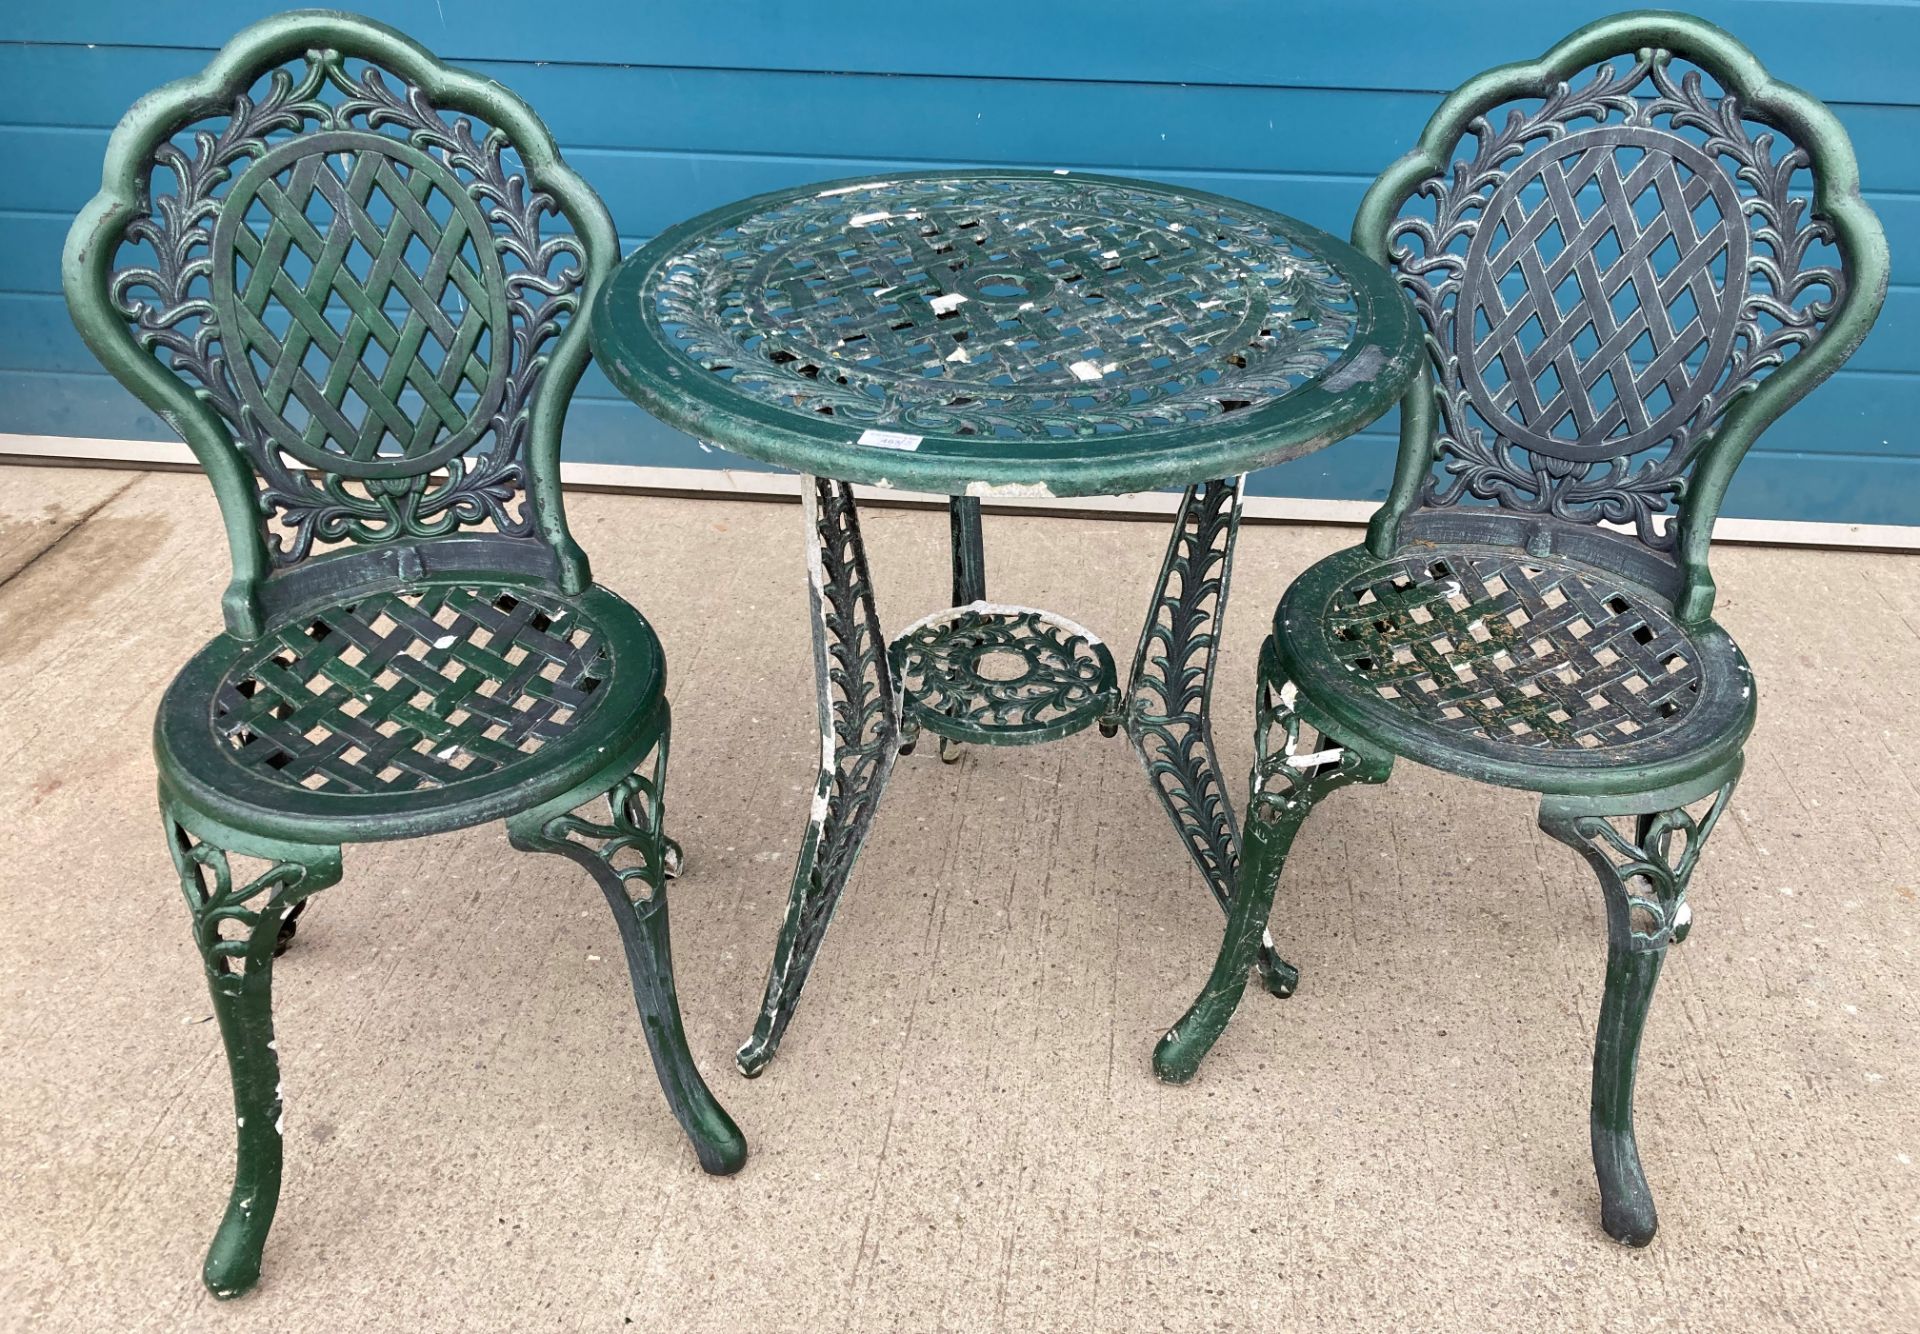 A green painted aluminium patio table,